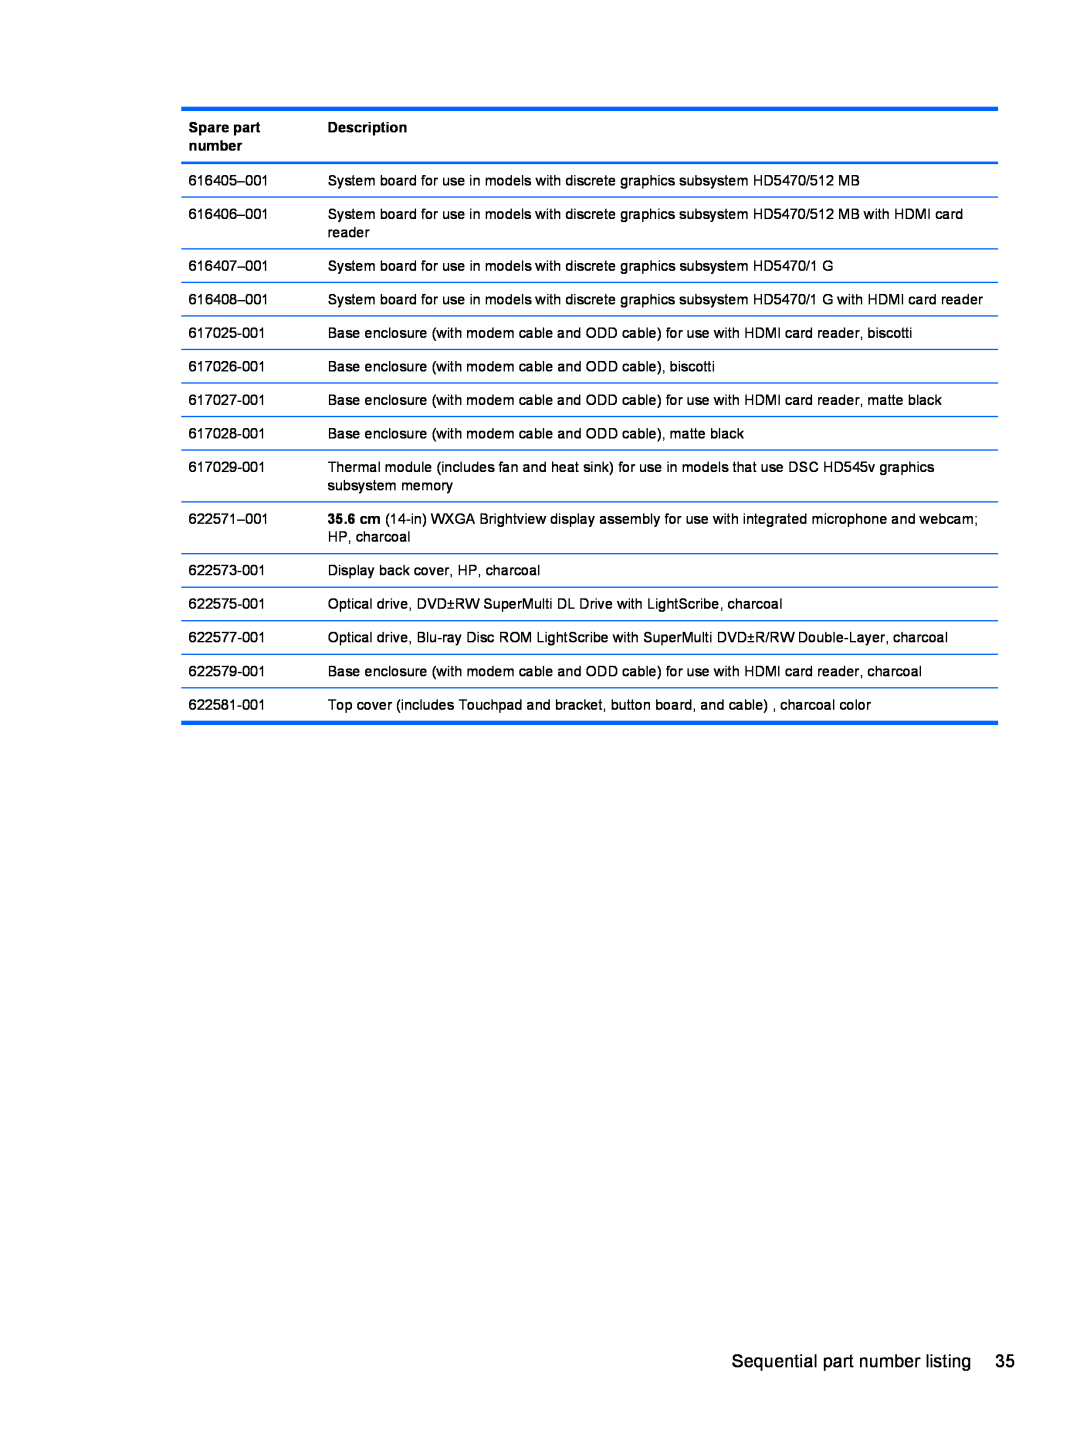 Compaq CQ42 manual Sequential part number listing, Spare part, Description 